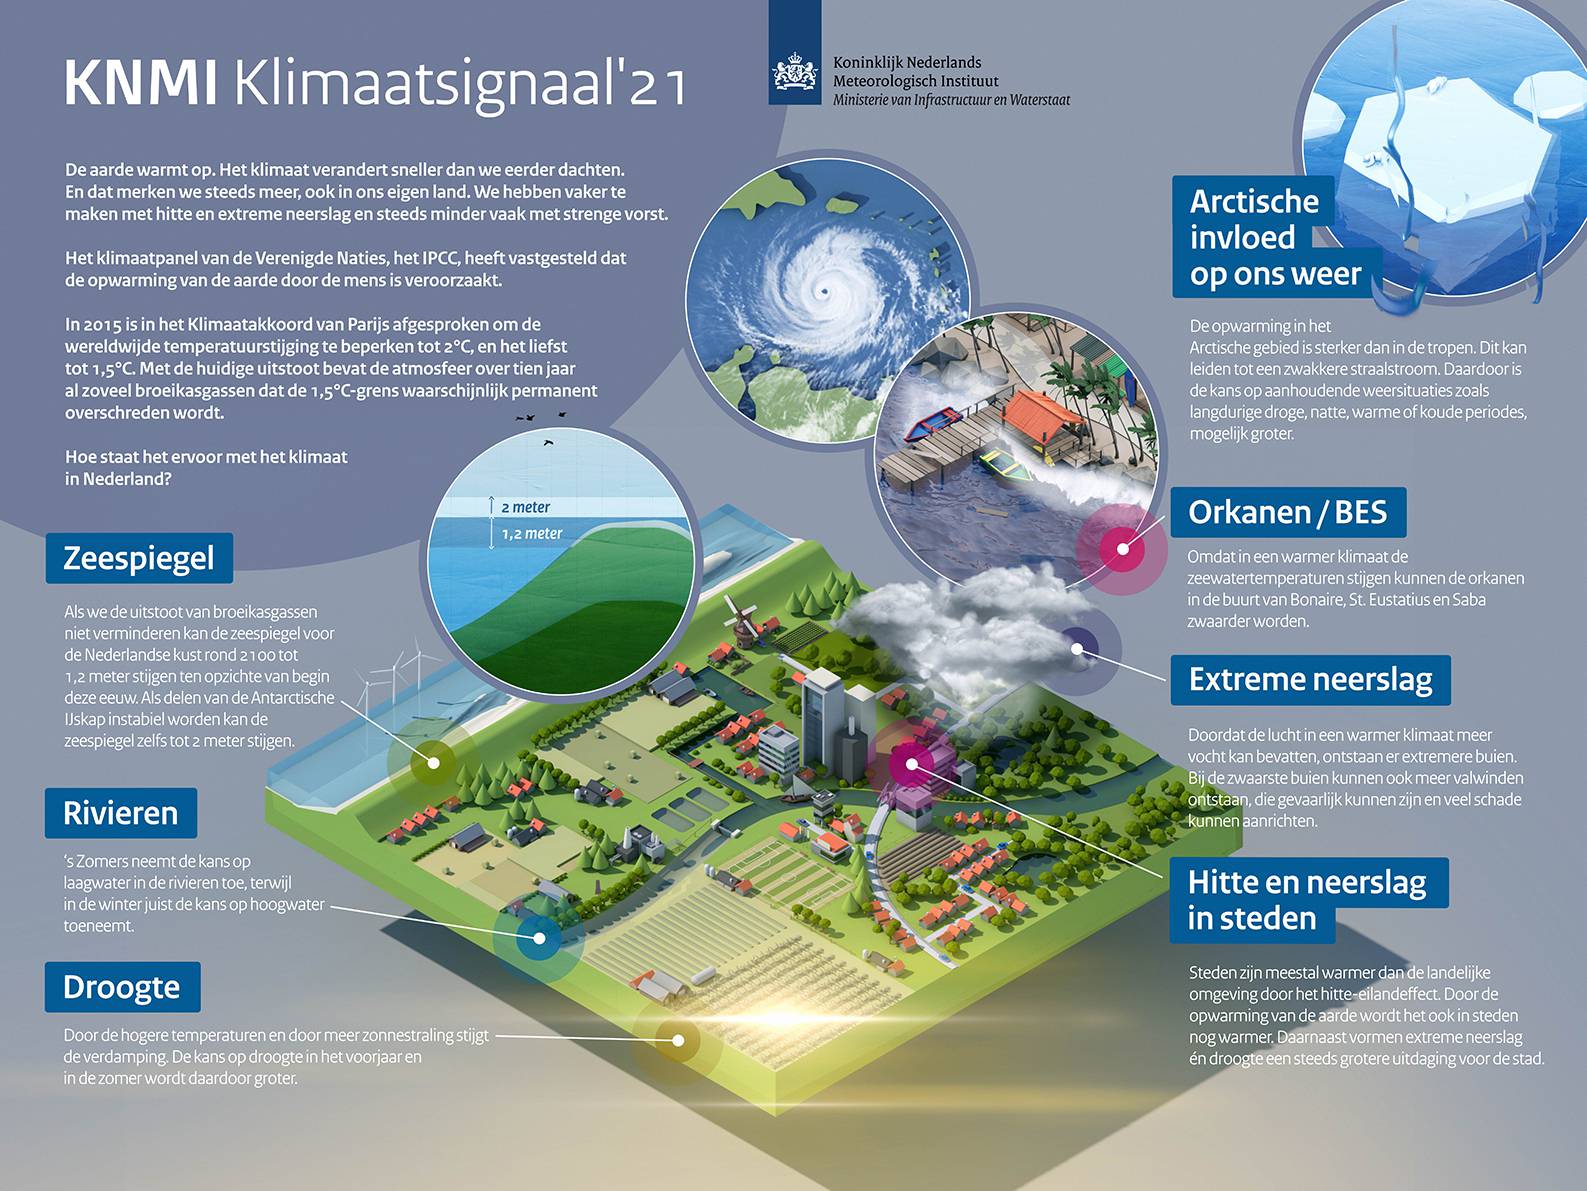 KNMI's Klimaatsignaal'21 infographic